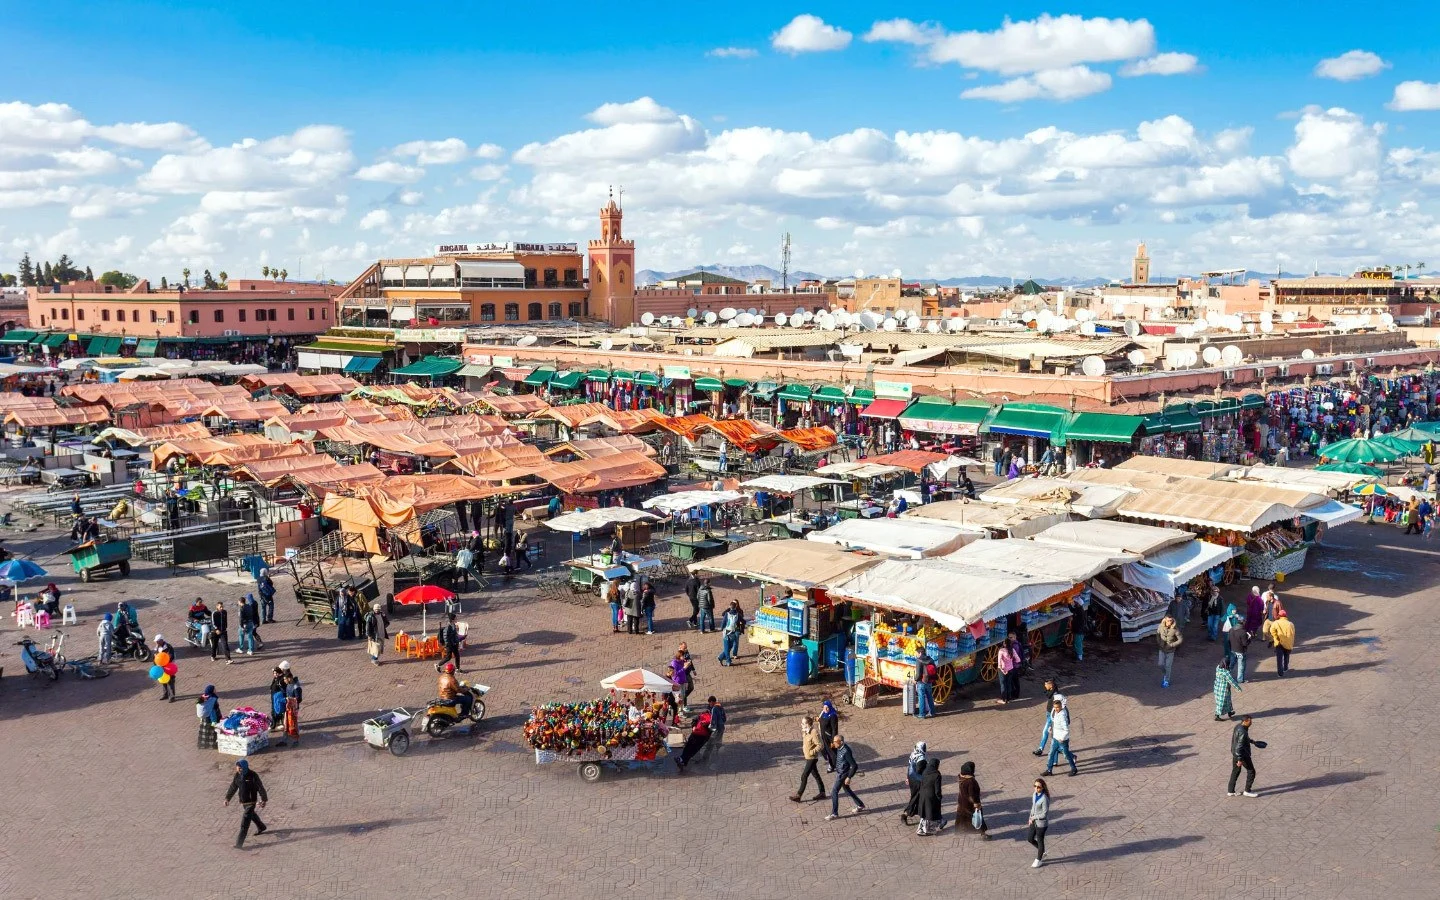 The Djemma El-Fna square in Marrakech medina